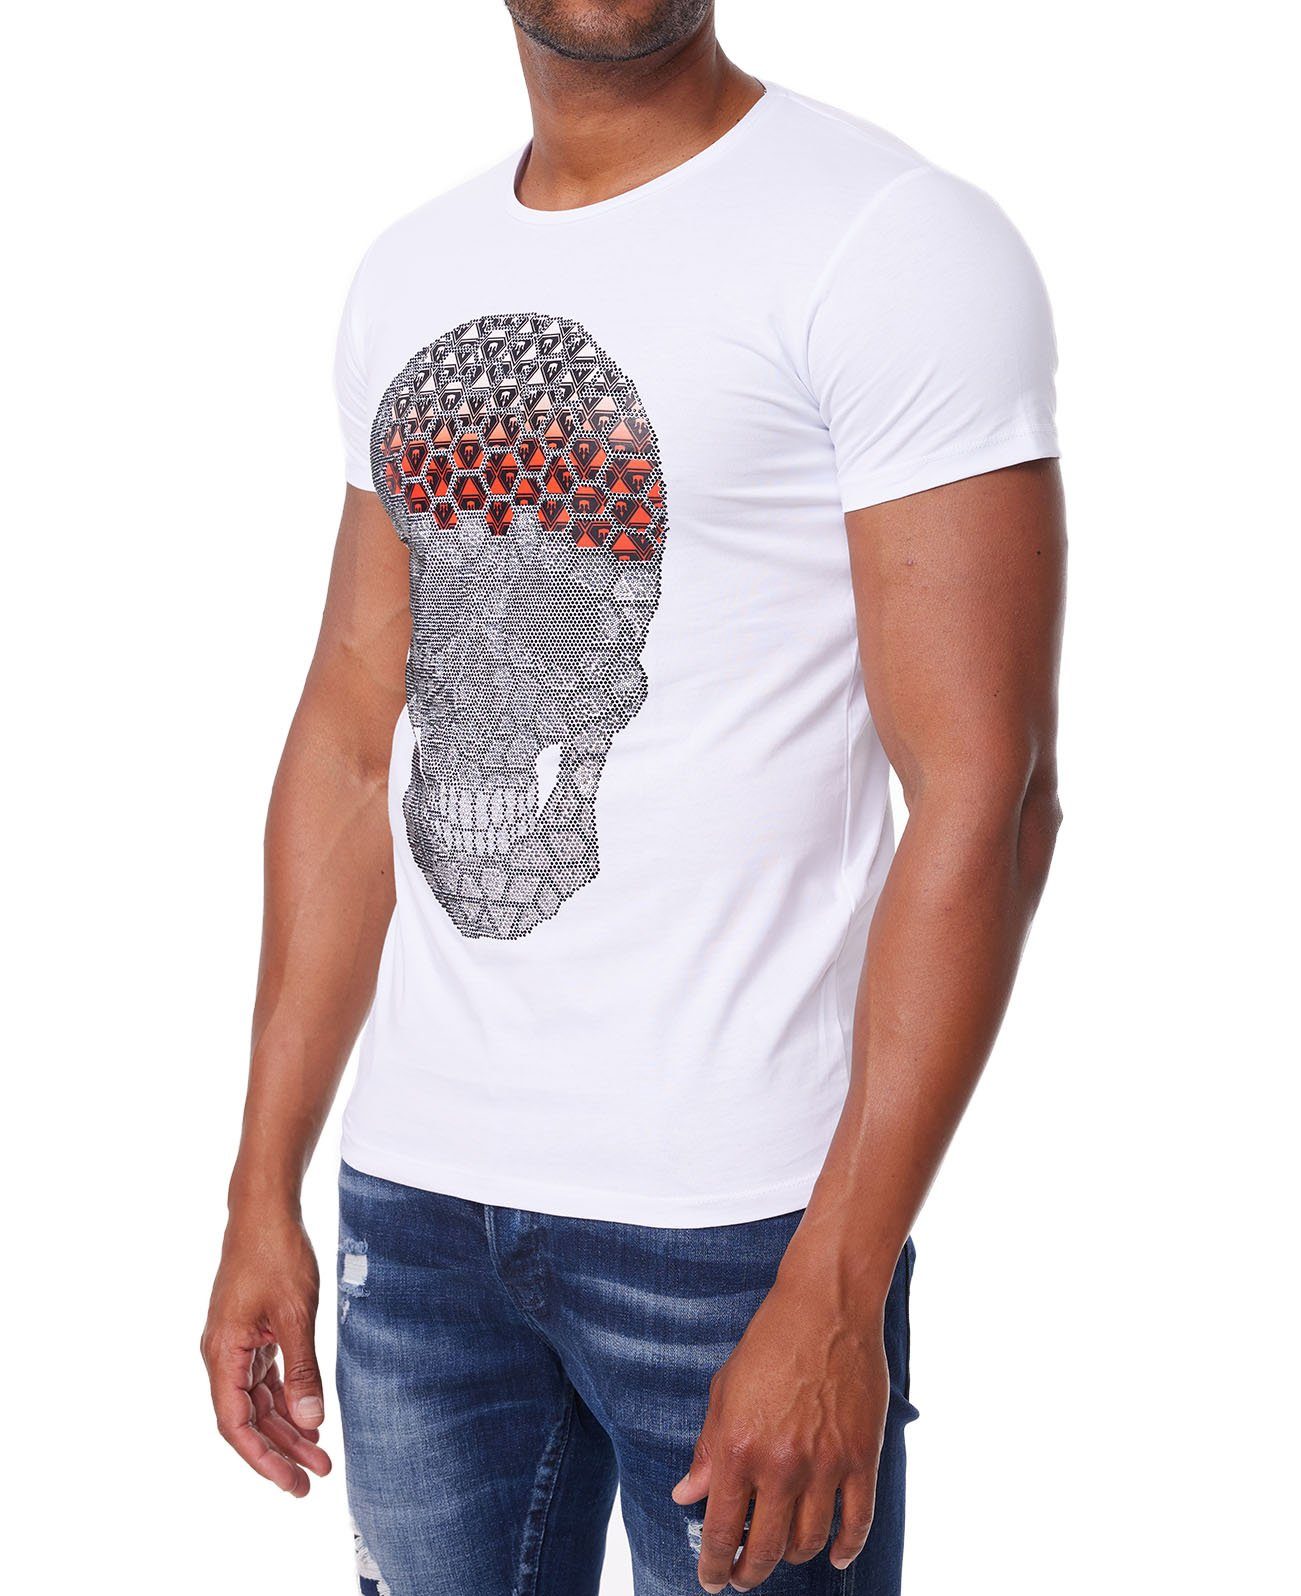 TRUENO T-Shirt Lässiges T-Shirt Kurzarm mit besonderem Herren Totenkopf Motiv